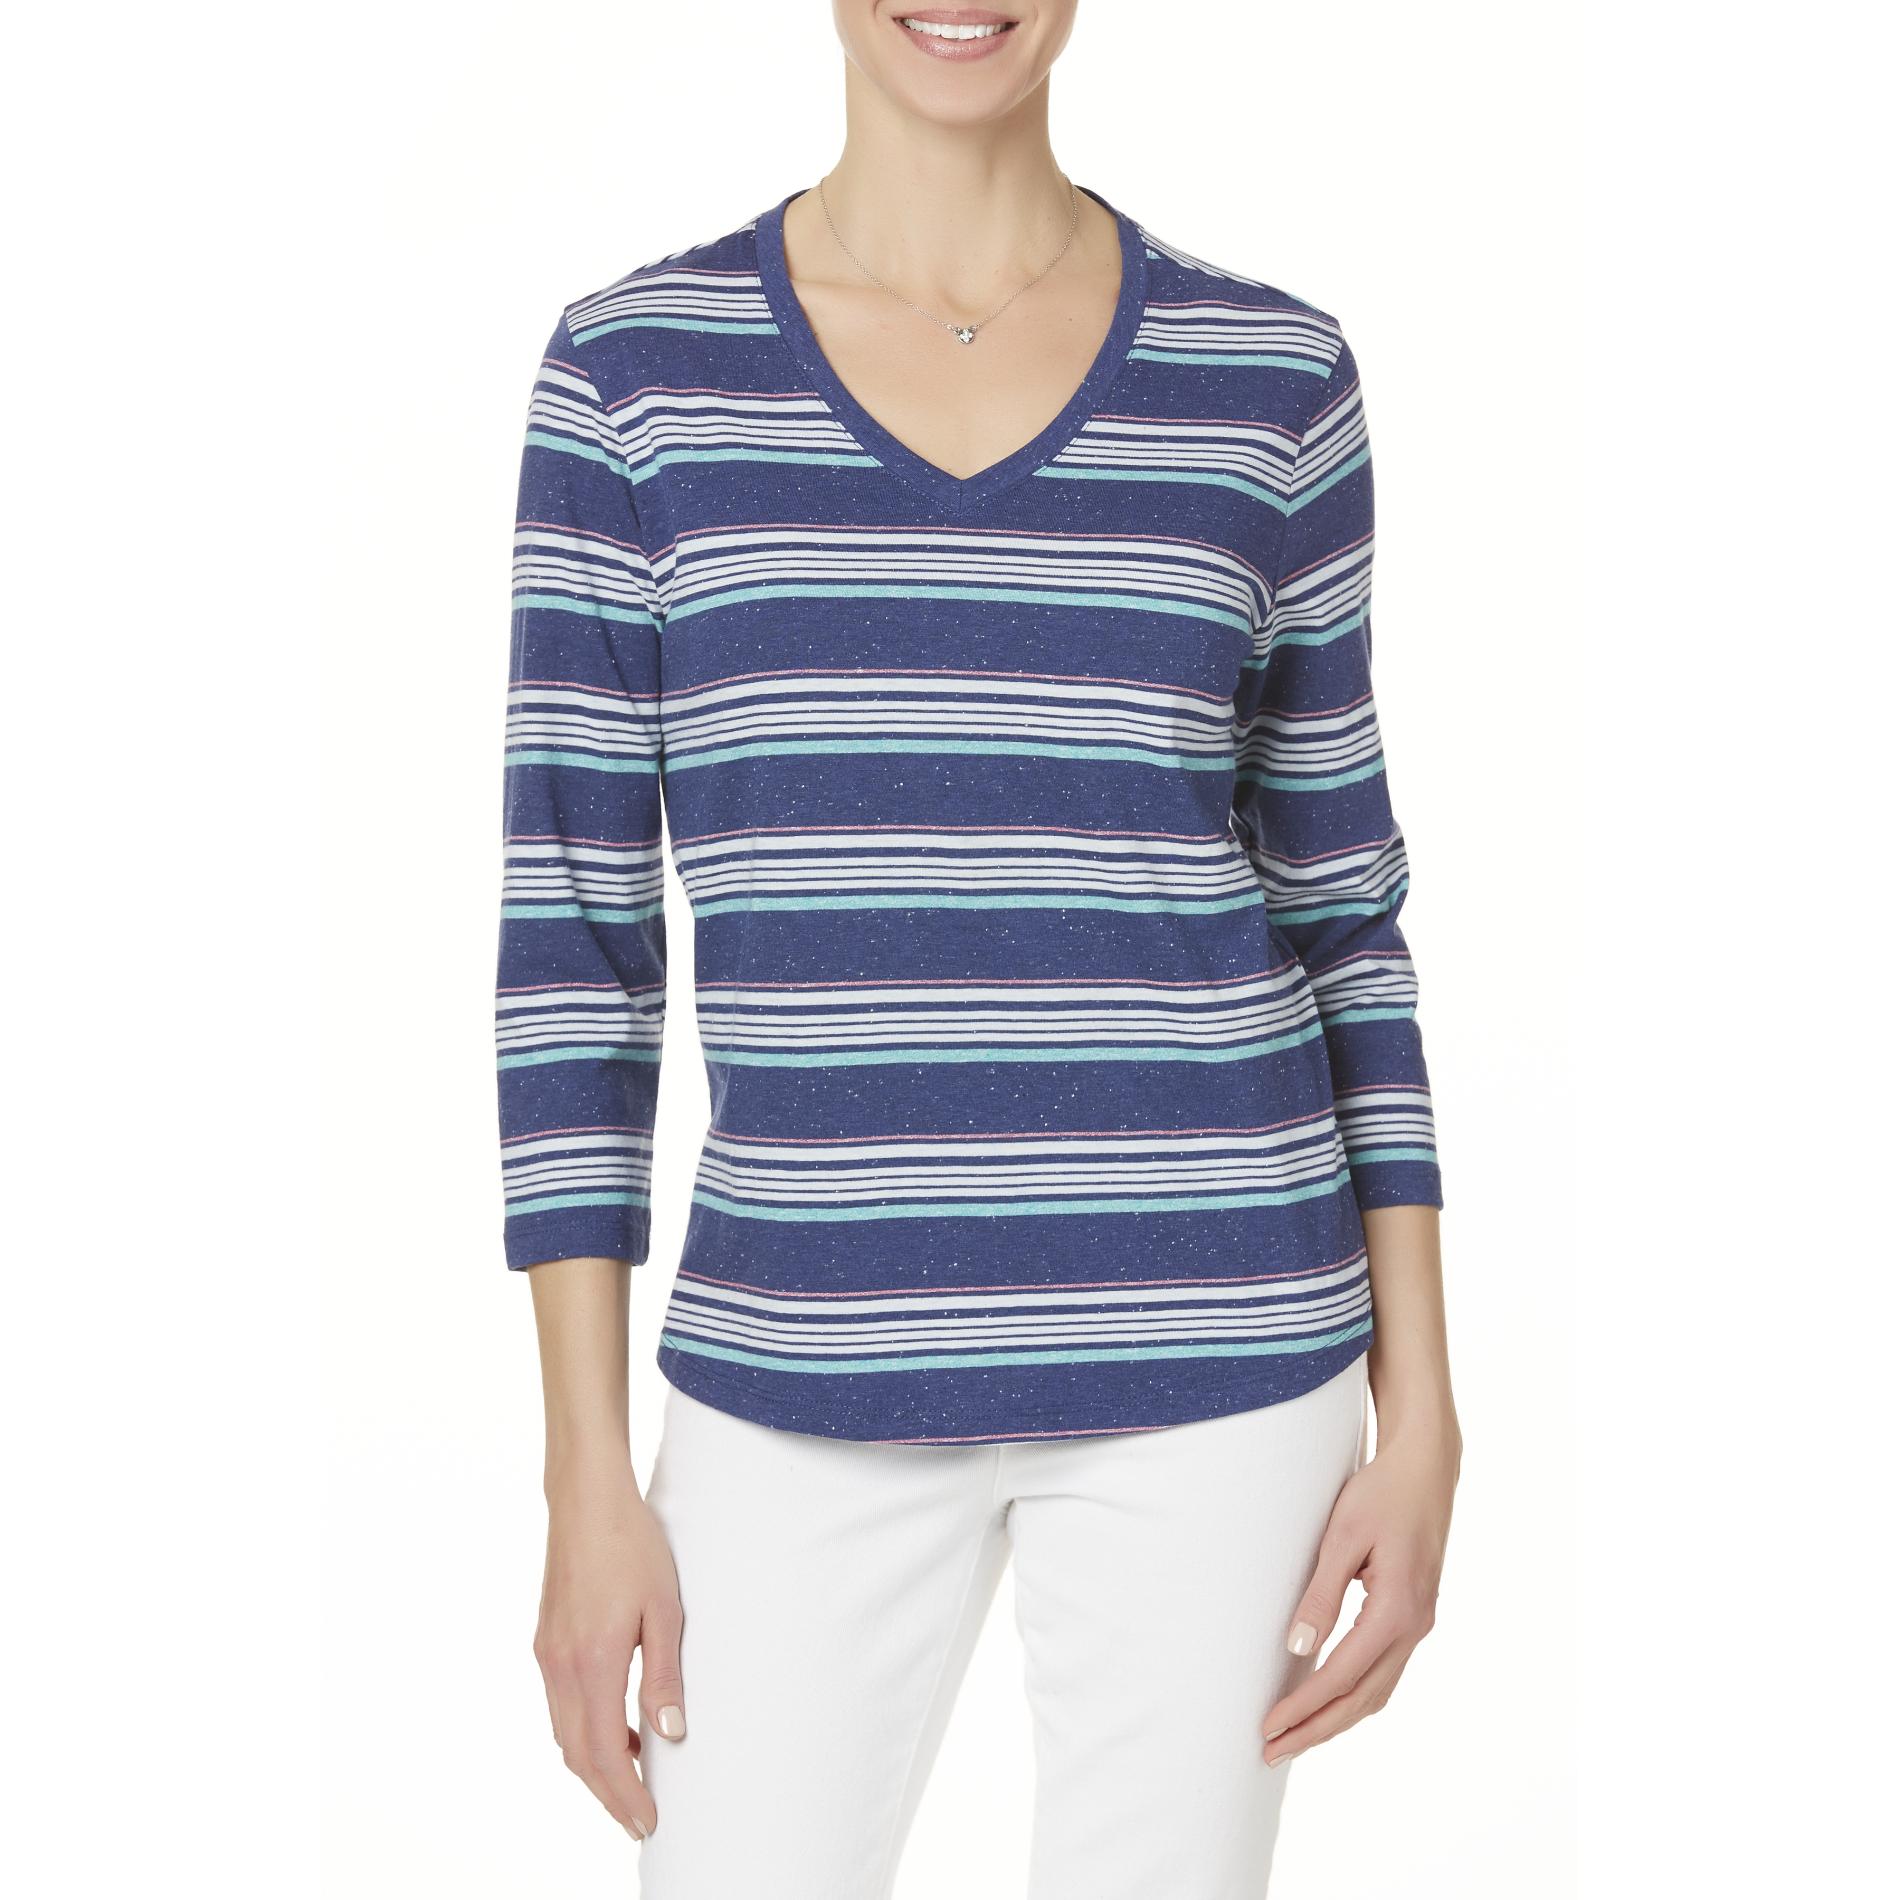 Basic Editions Women's V-Neck T-Shirt - Striped